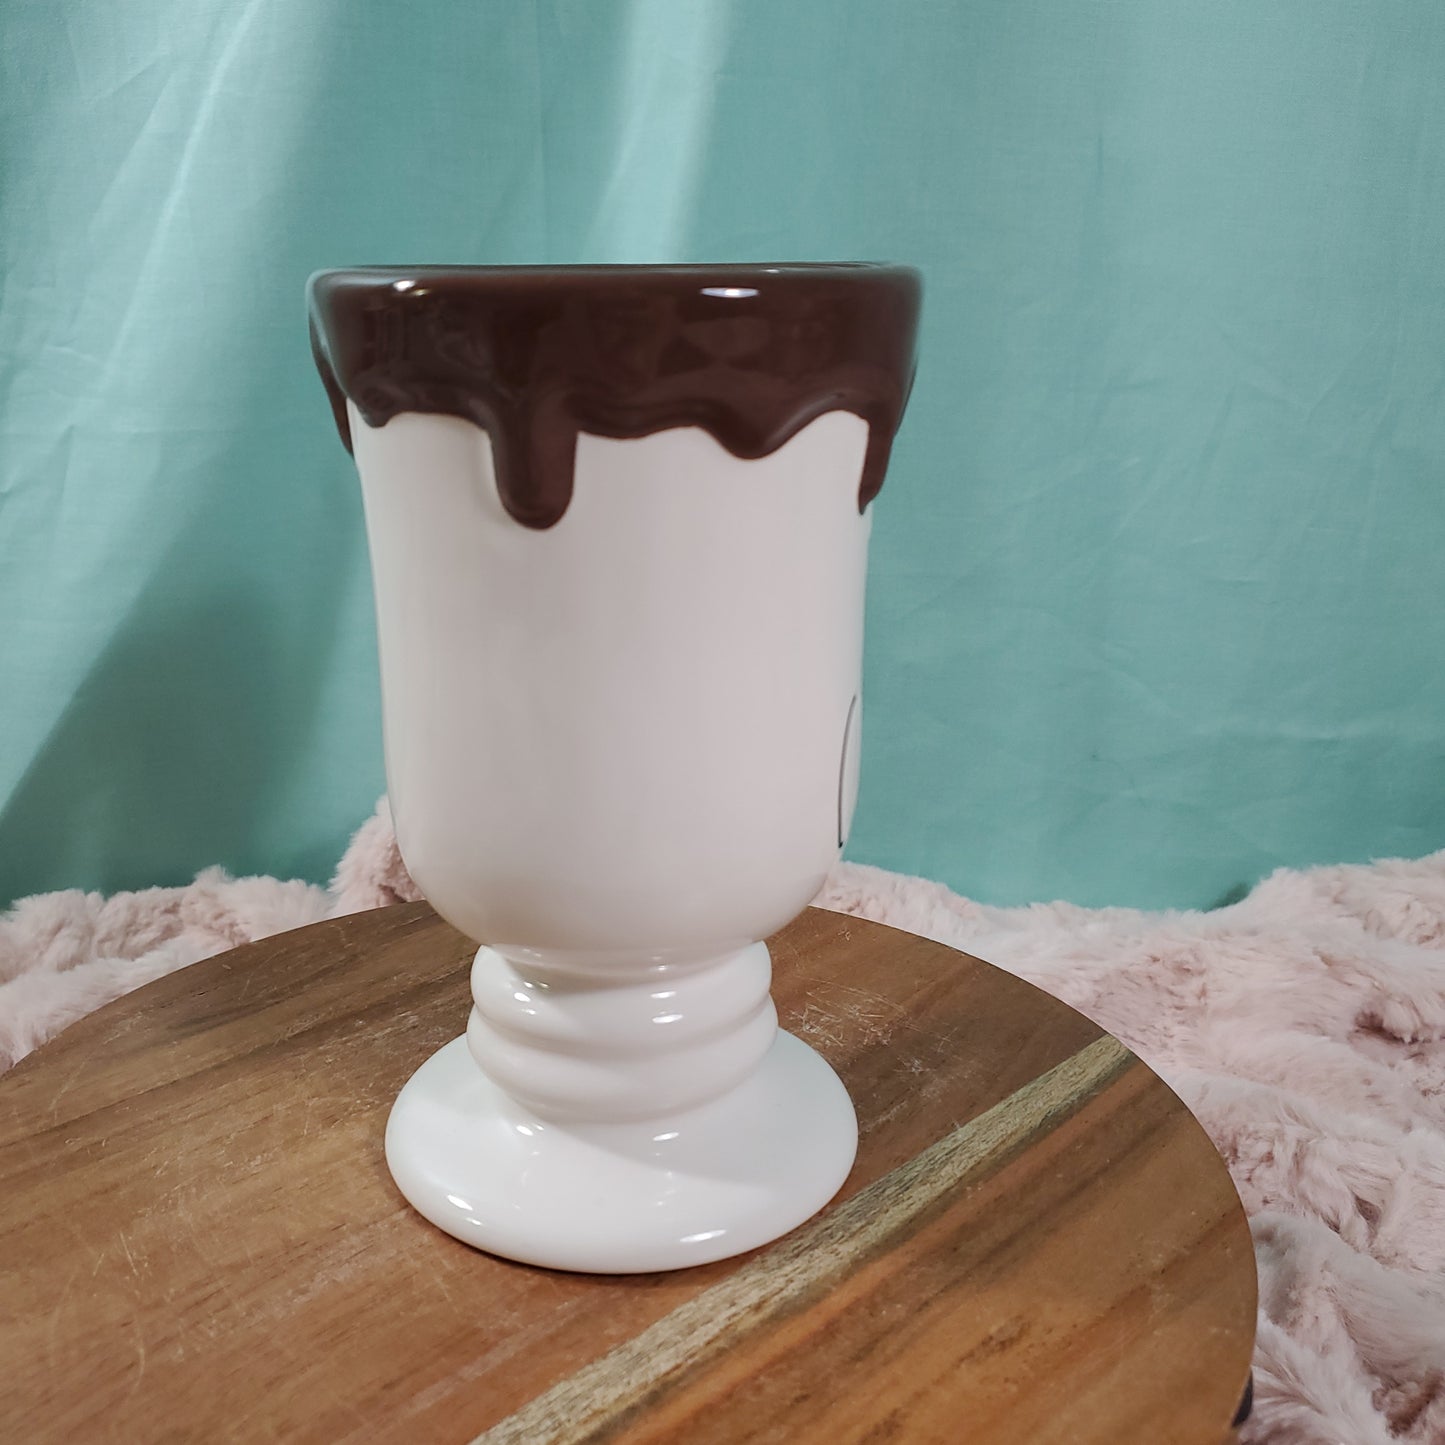 Rae Dunn "HOT COCOA" Ceramic Irish Cream Style Mug - New Release